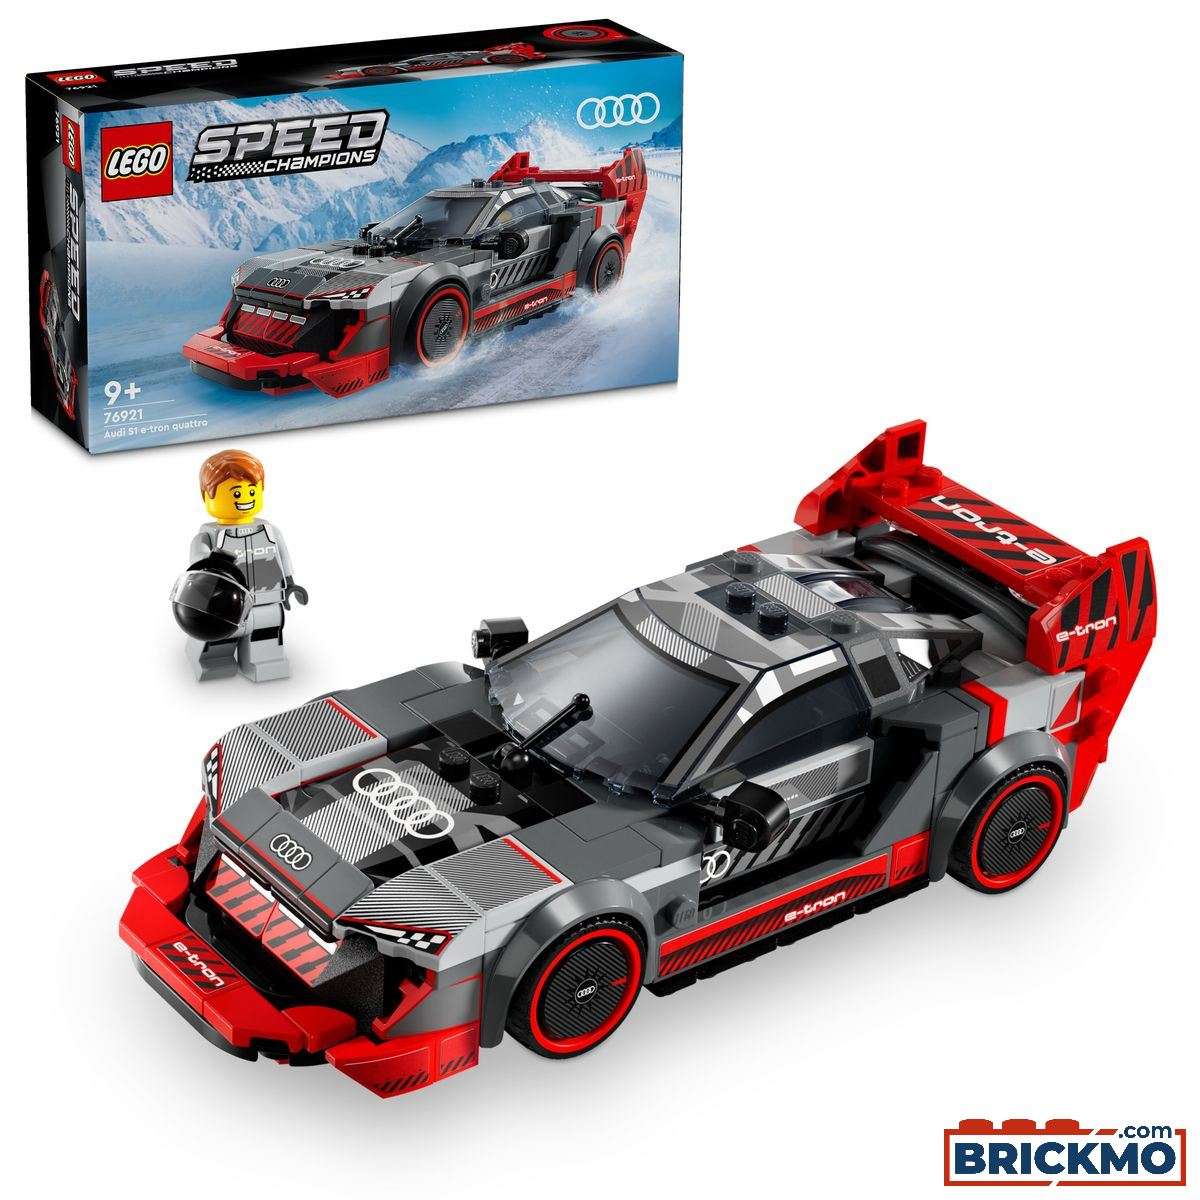 LEGO Speed Champions 76921 Audi S1 e-tron quattro-racerbil 76921